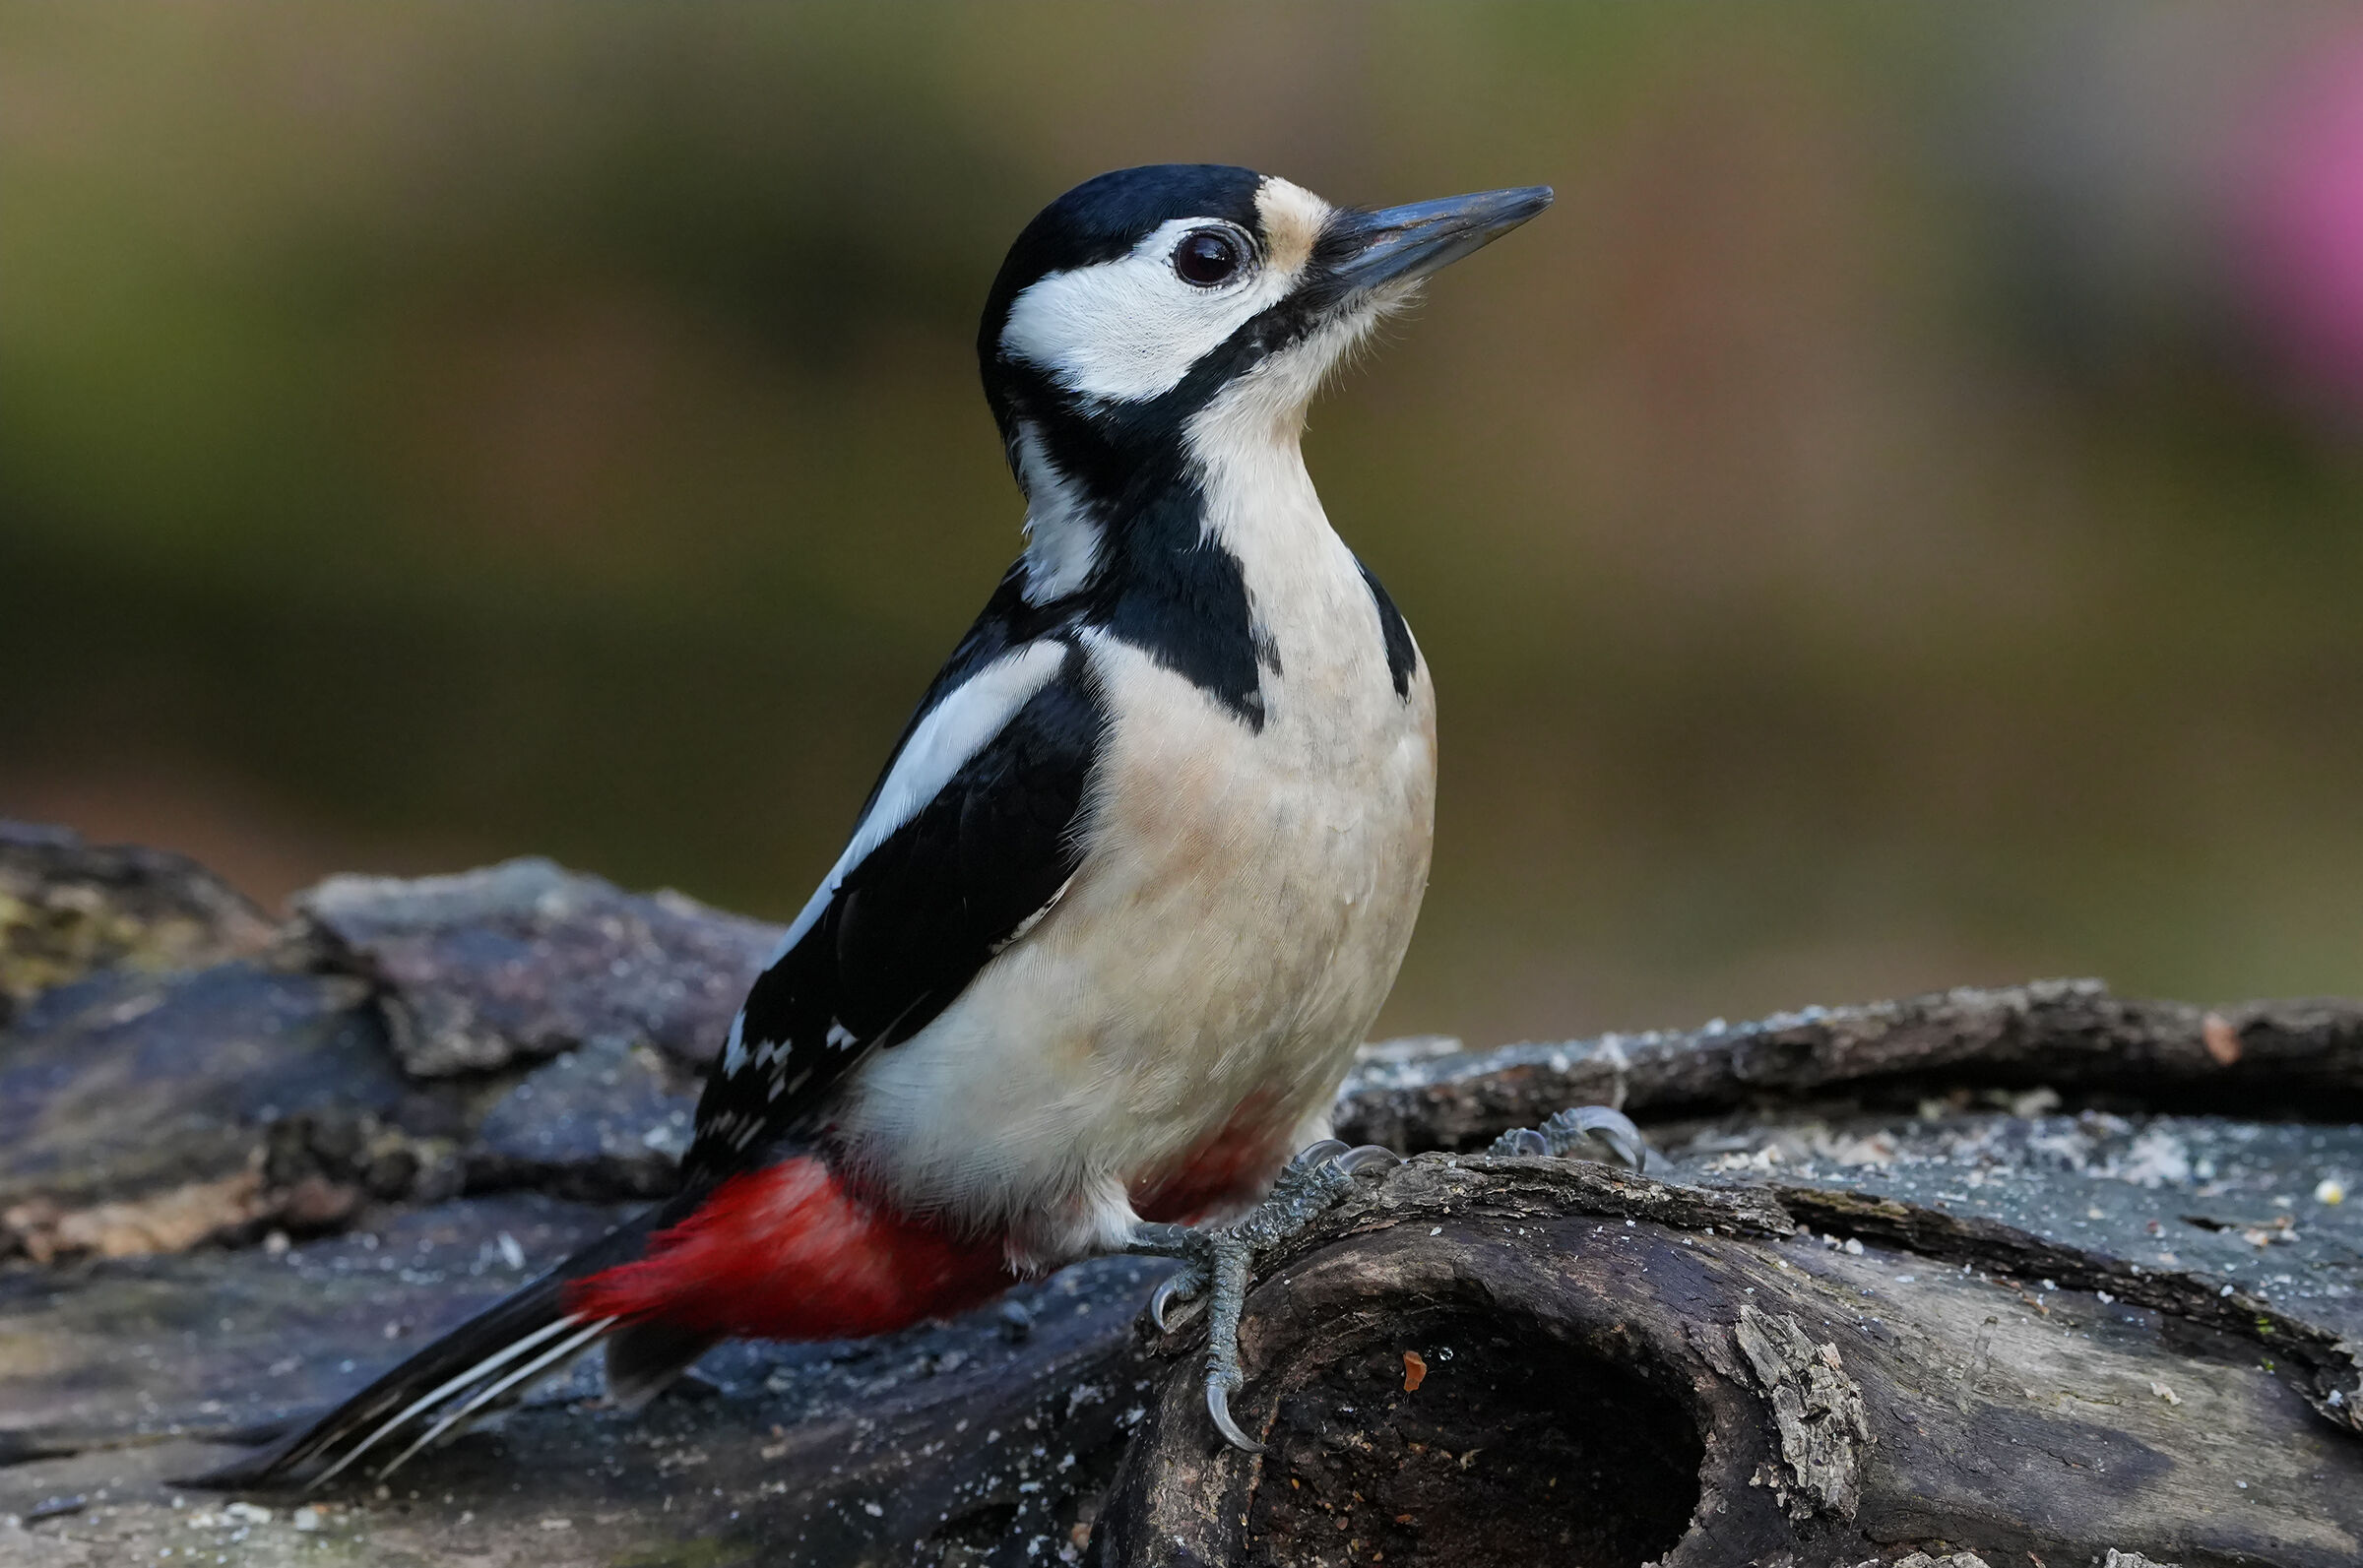 fem spotted woodpecker...